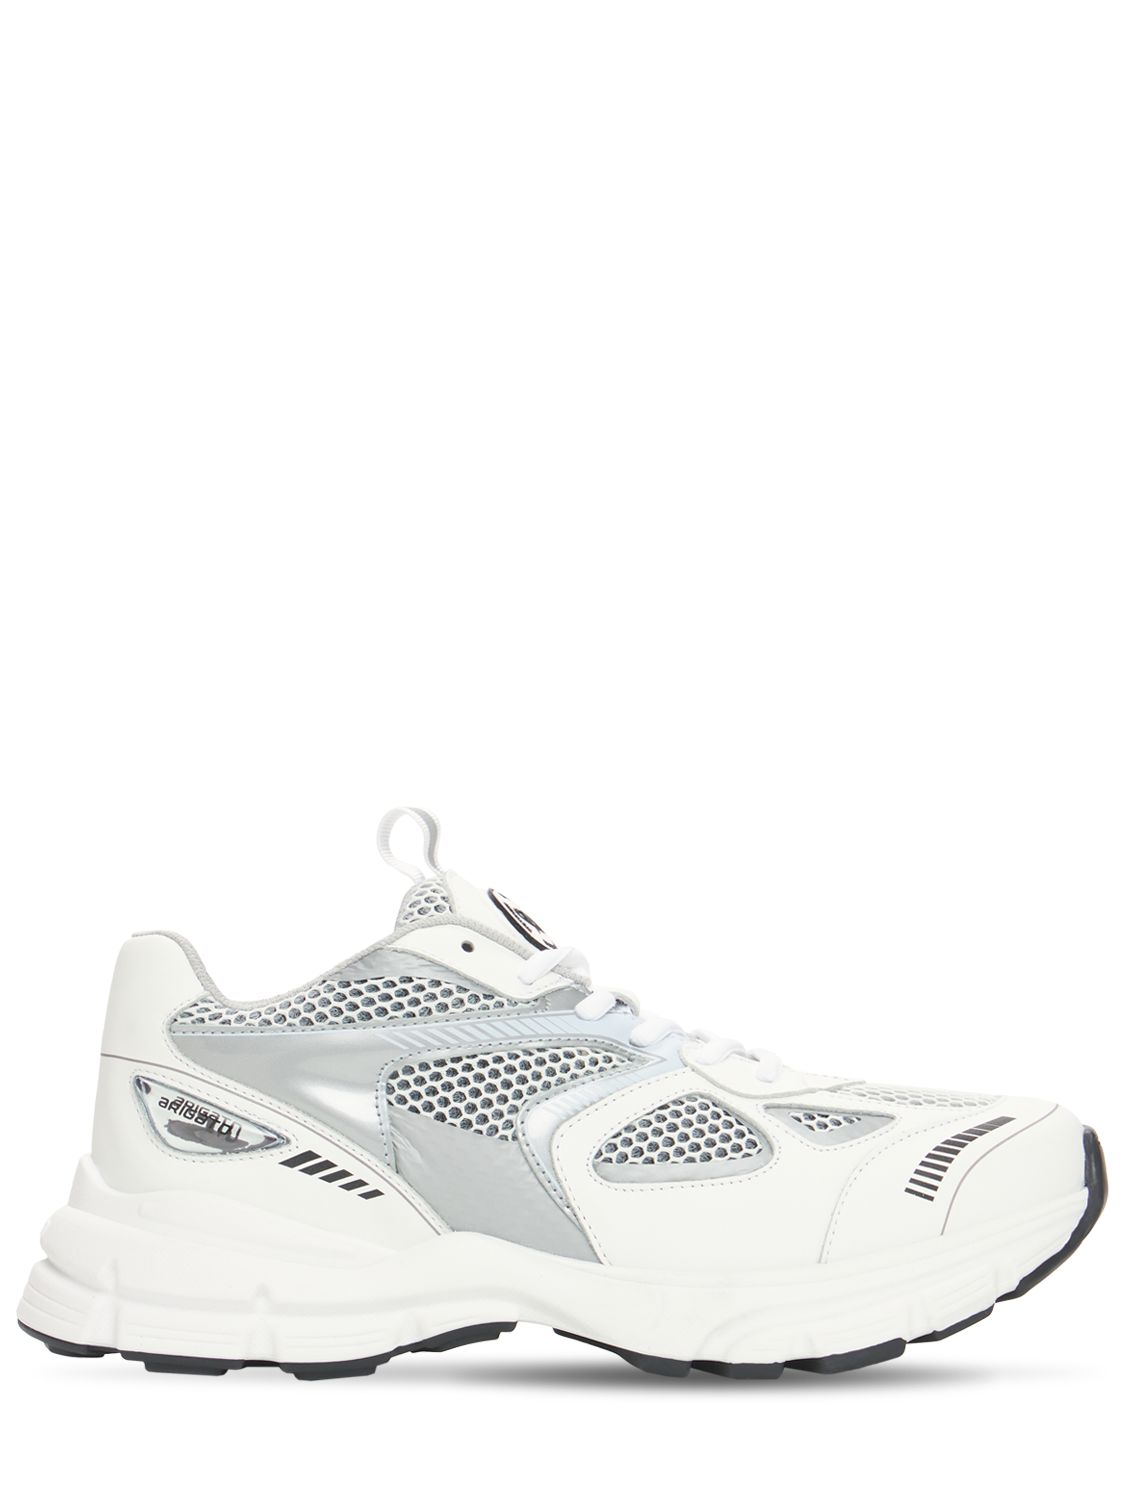 Axel Arigato Marathon Runner Sneakers In White/grey